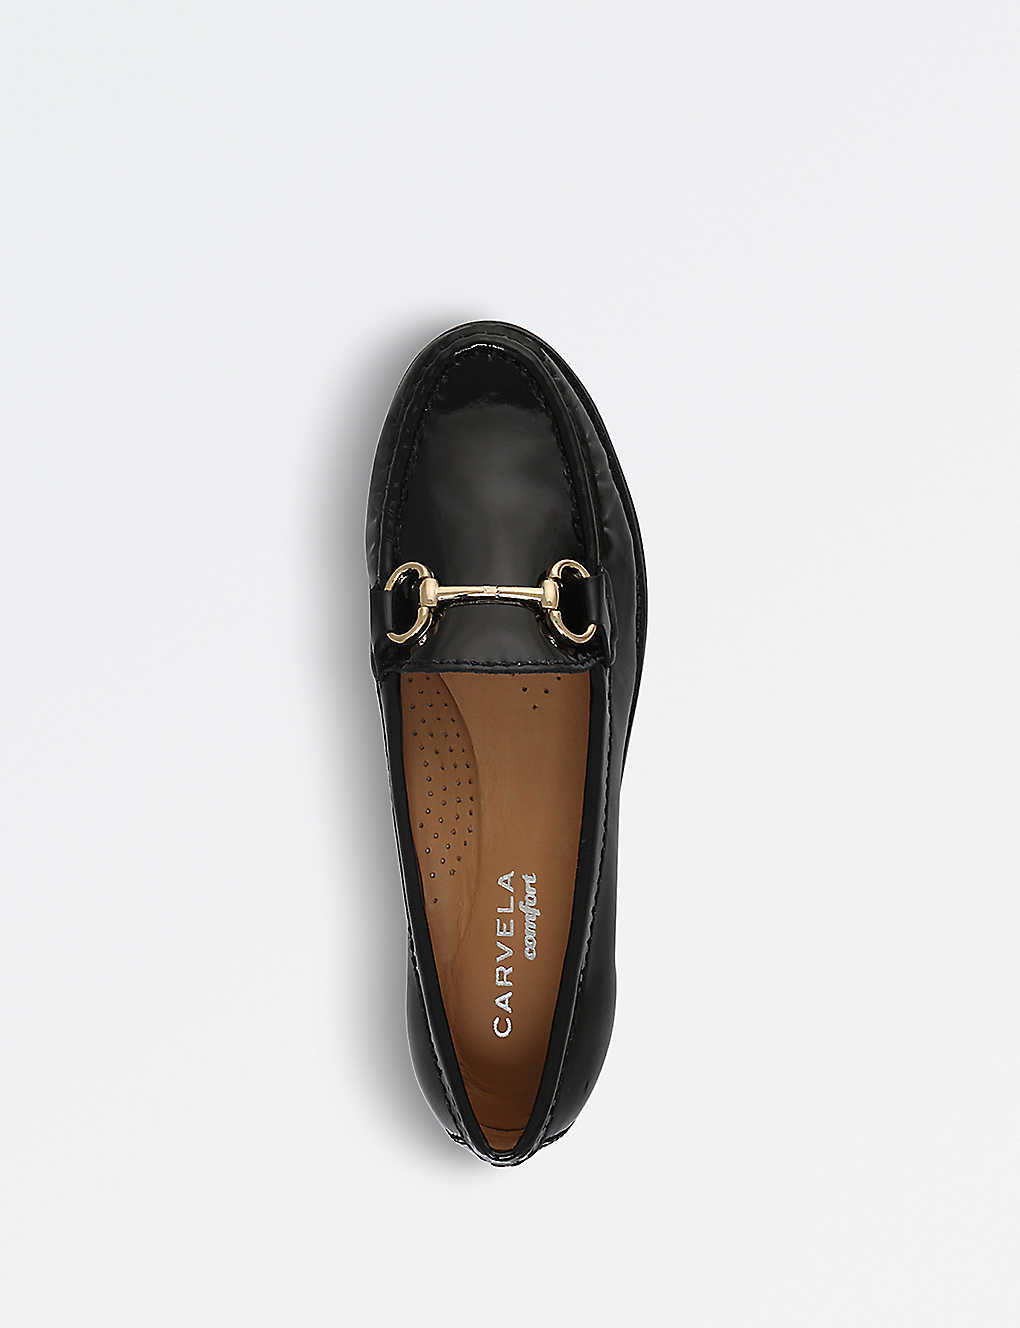 carvelashoe sale | CARVELA COMFORT Click 2 patent leather loafers ...